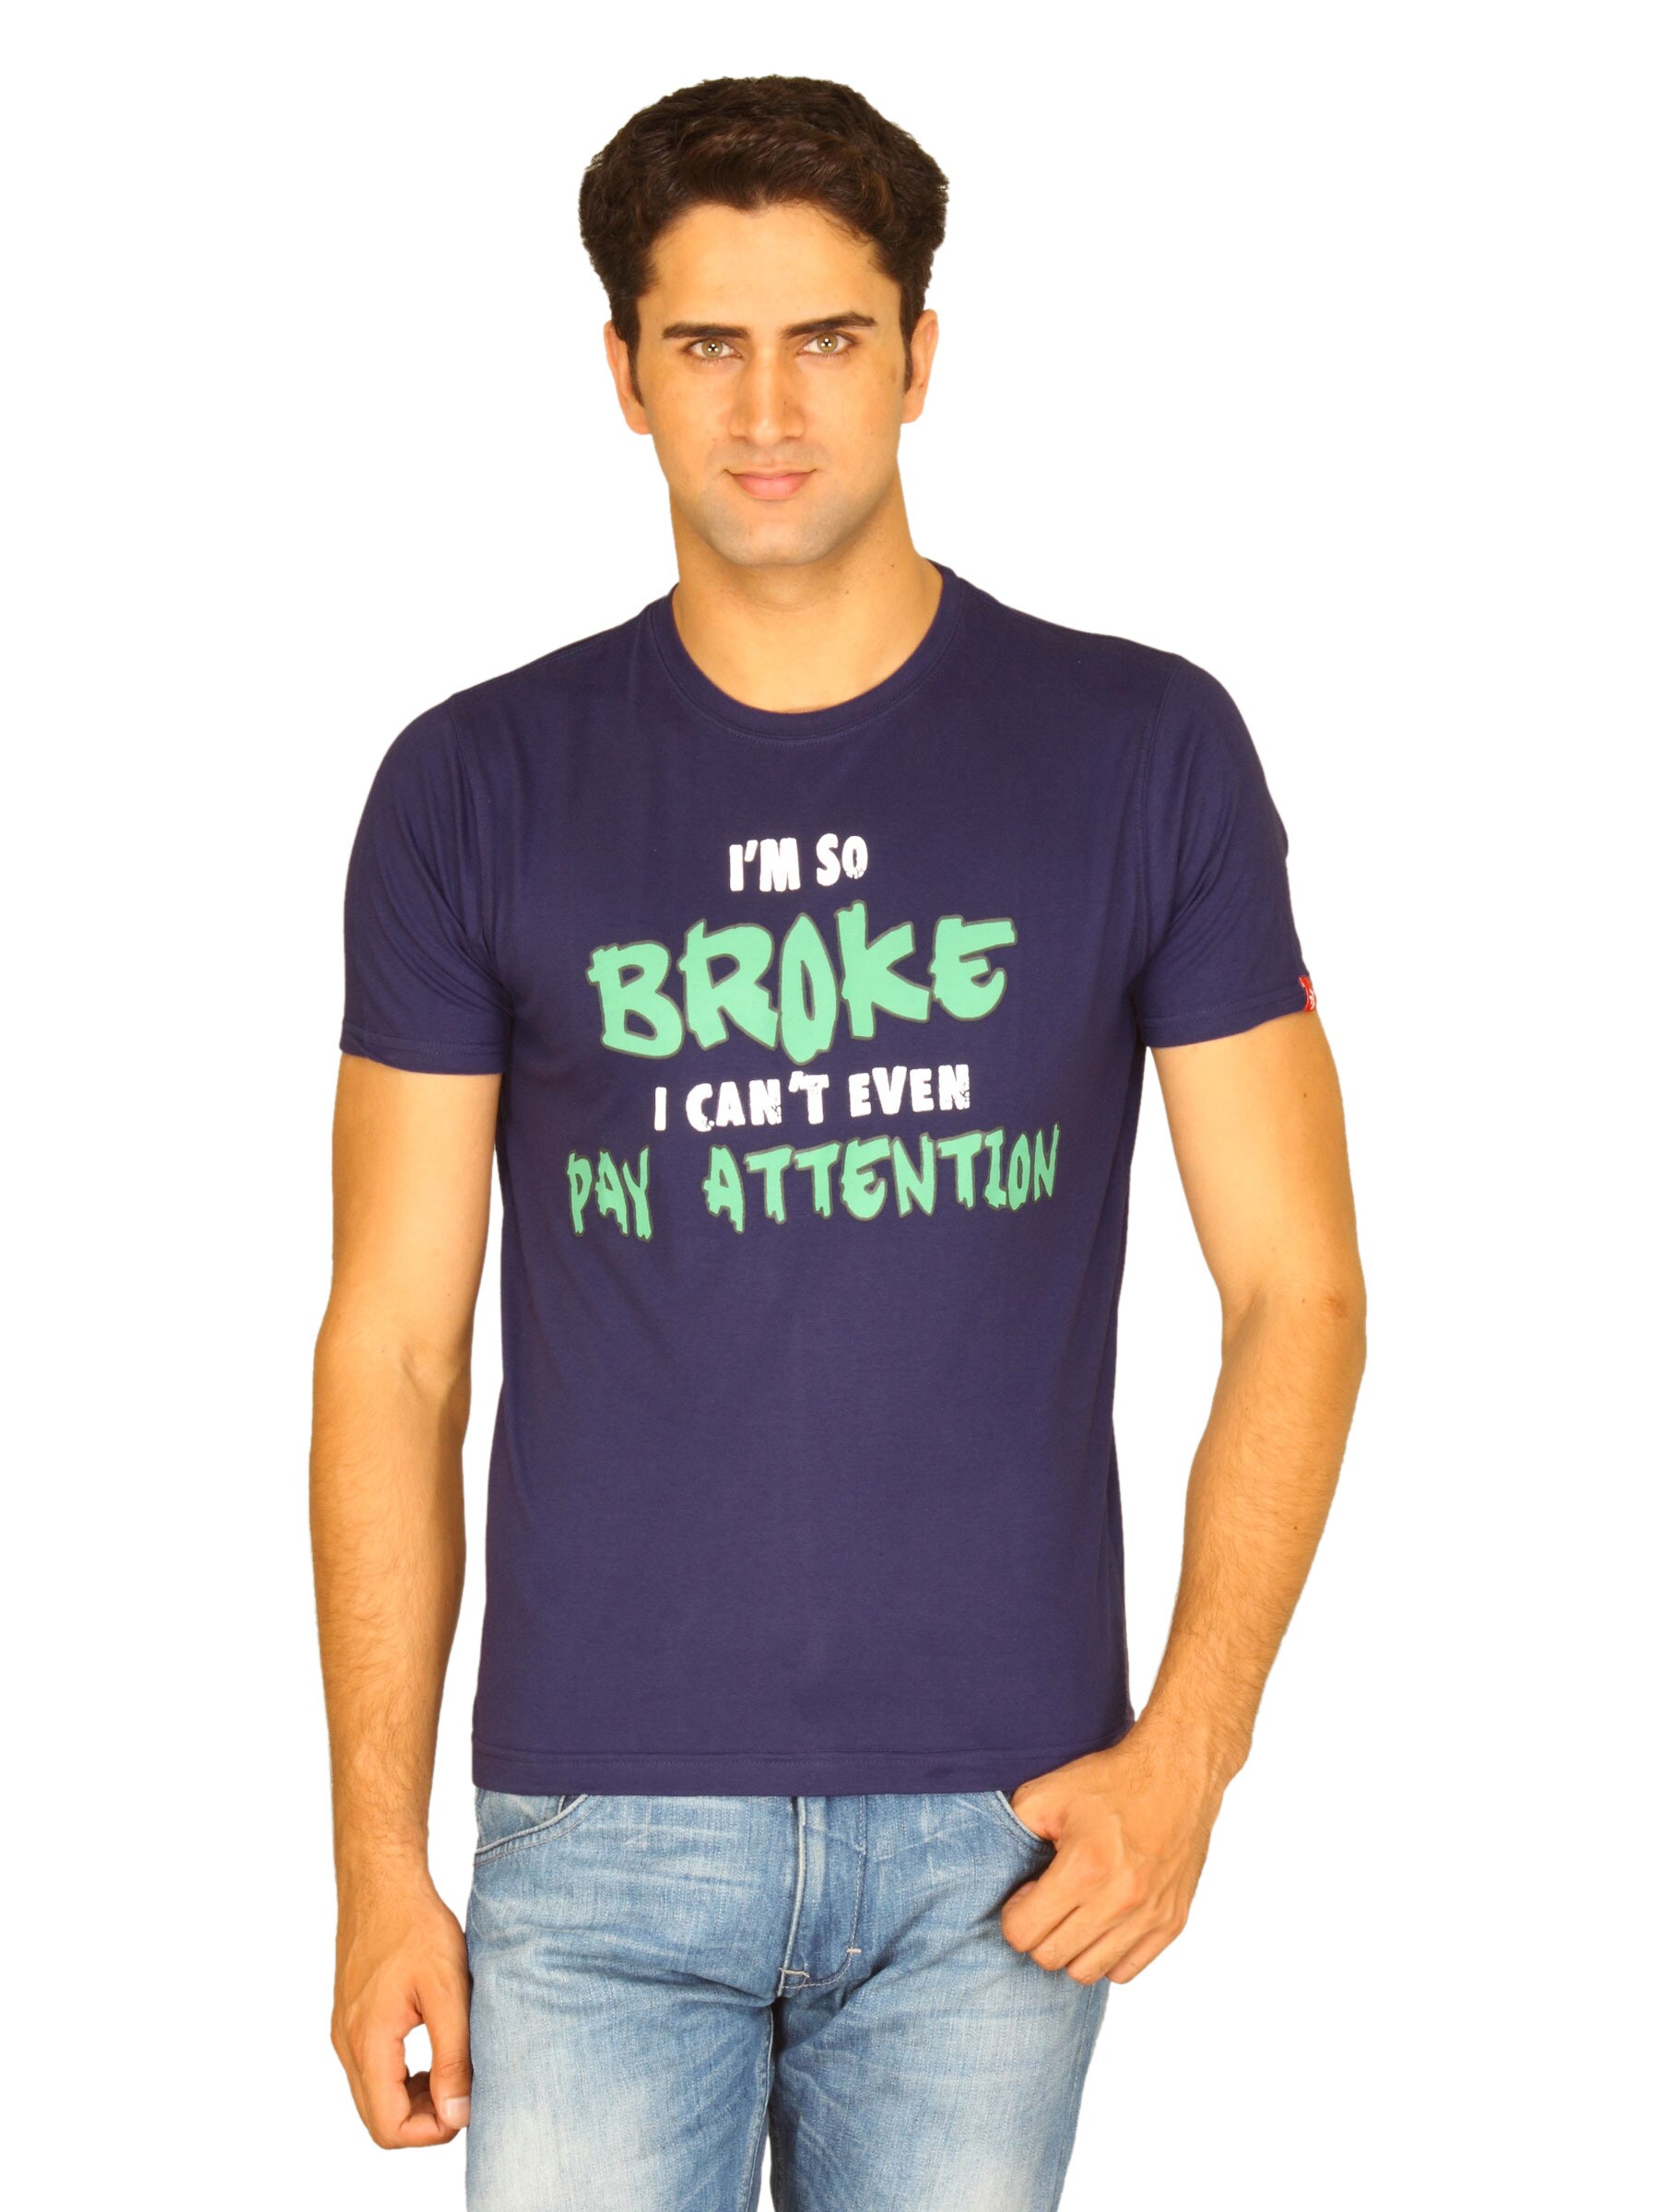 Probase Men's I'M So Broke Navy T-shirt